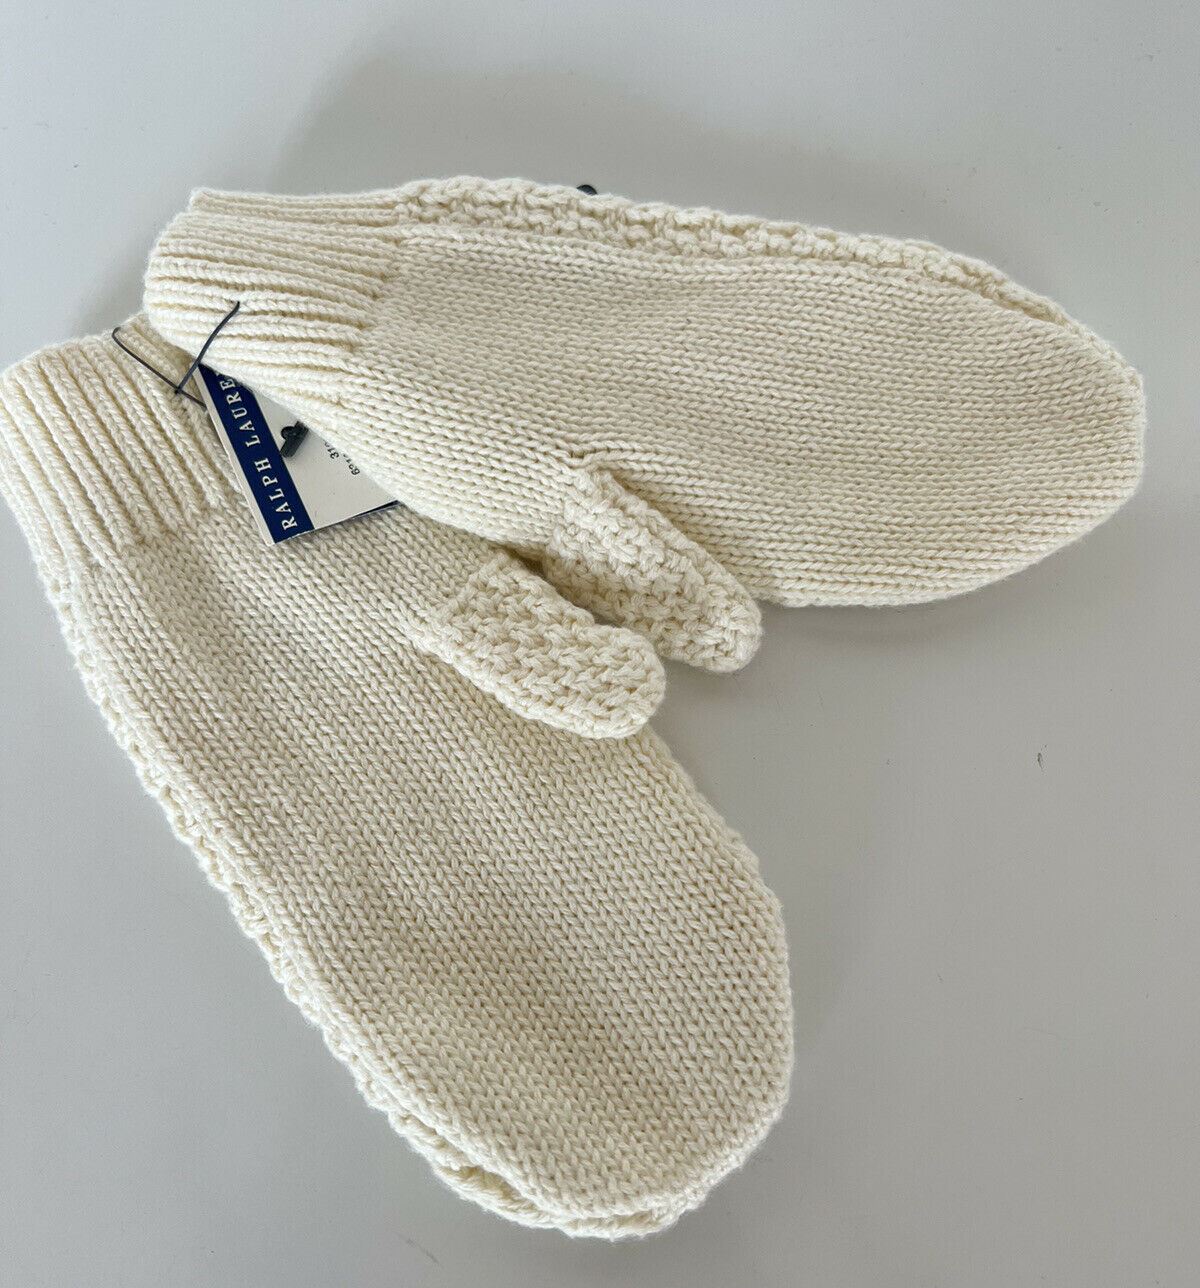 NWT Polo Ralph Lauren Girl's Cotton Gloves Cream Size 7-16